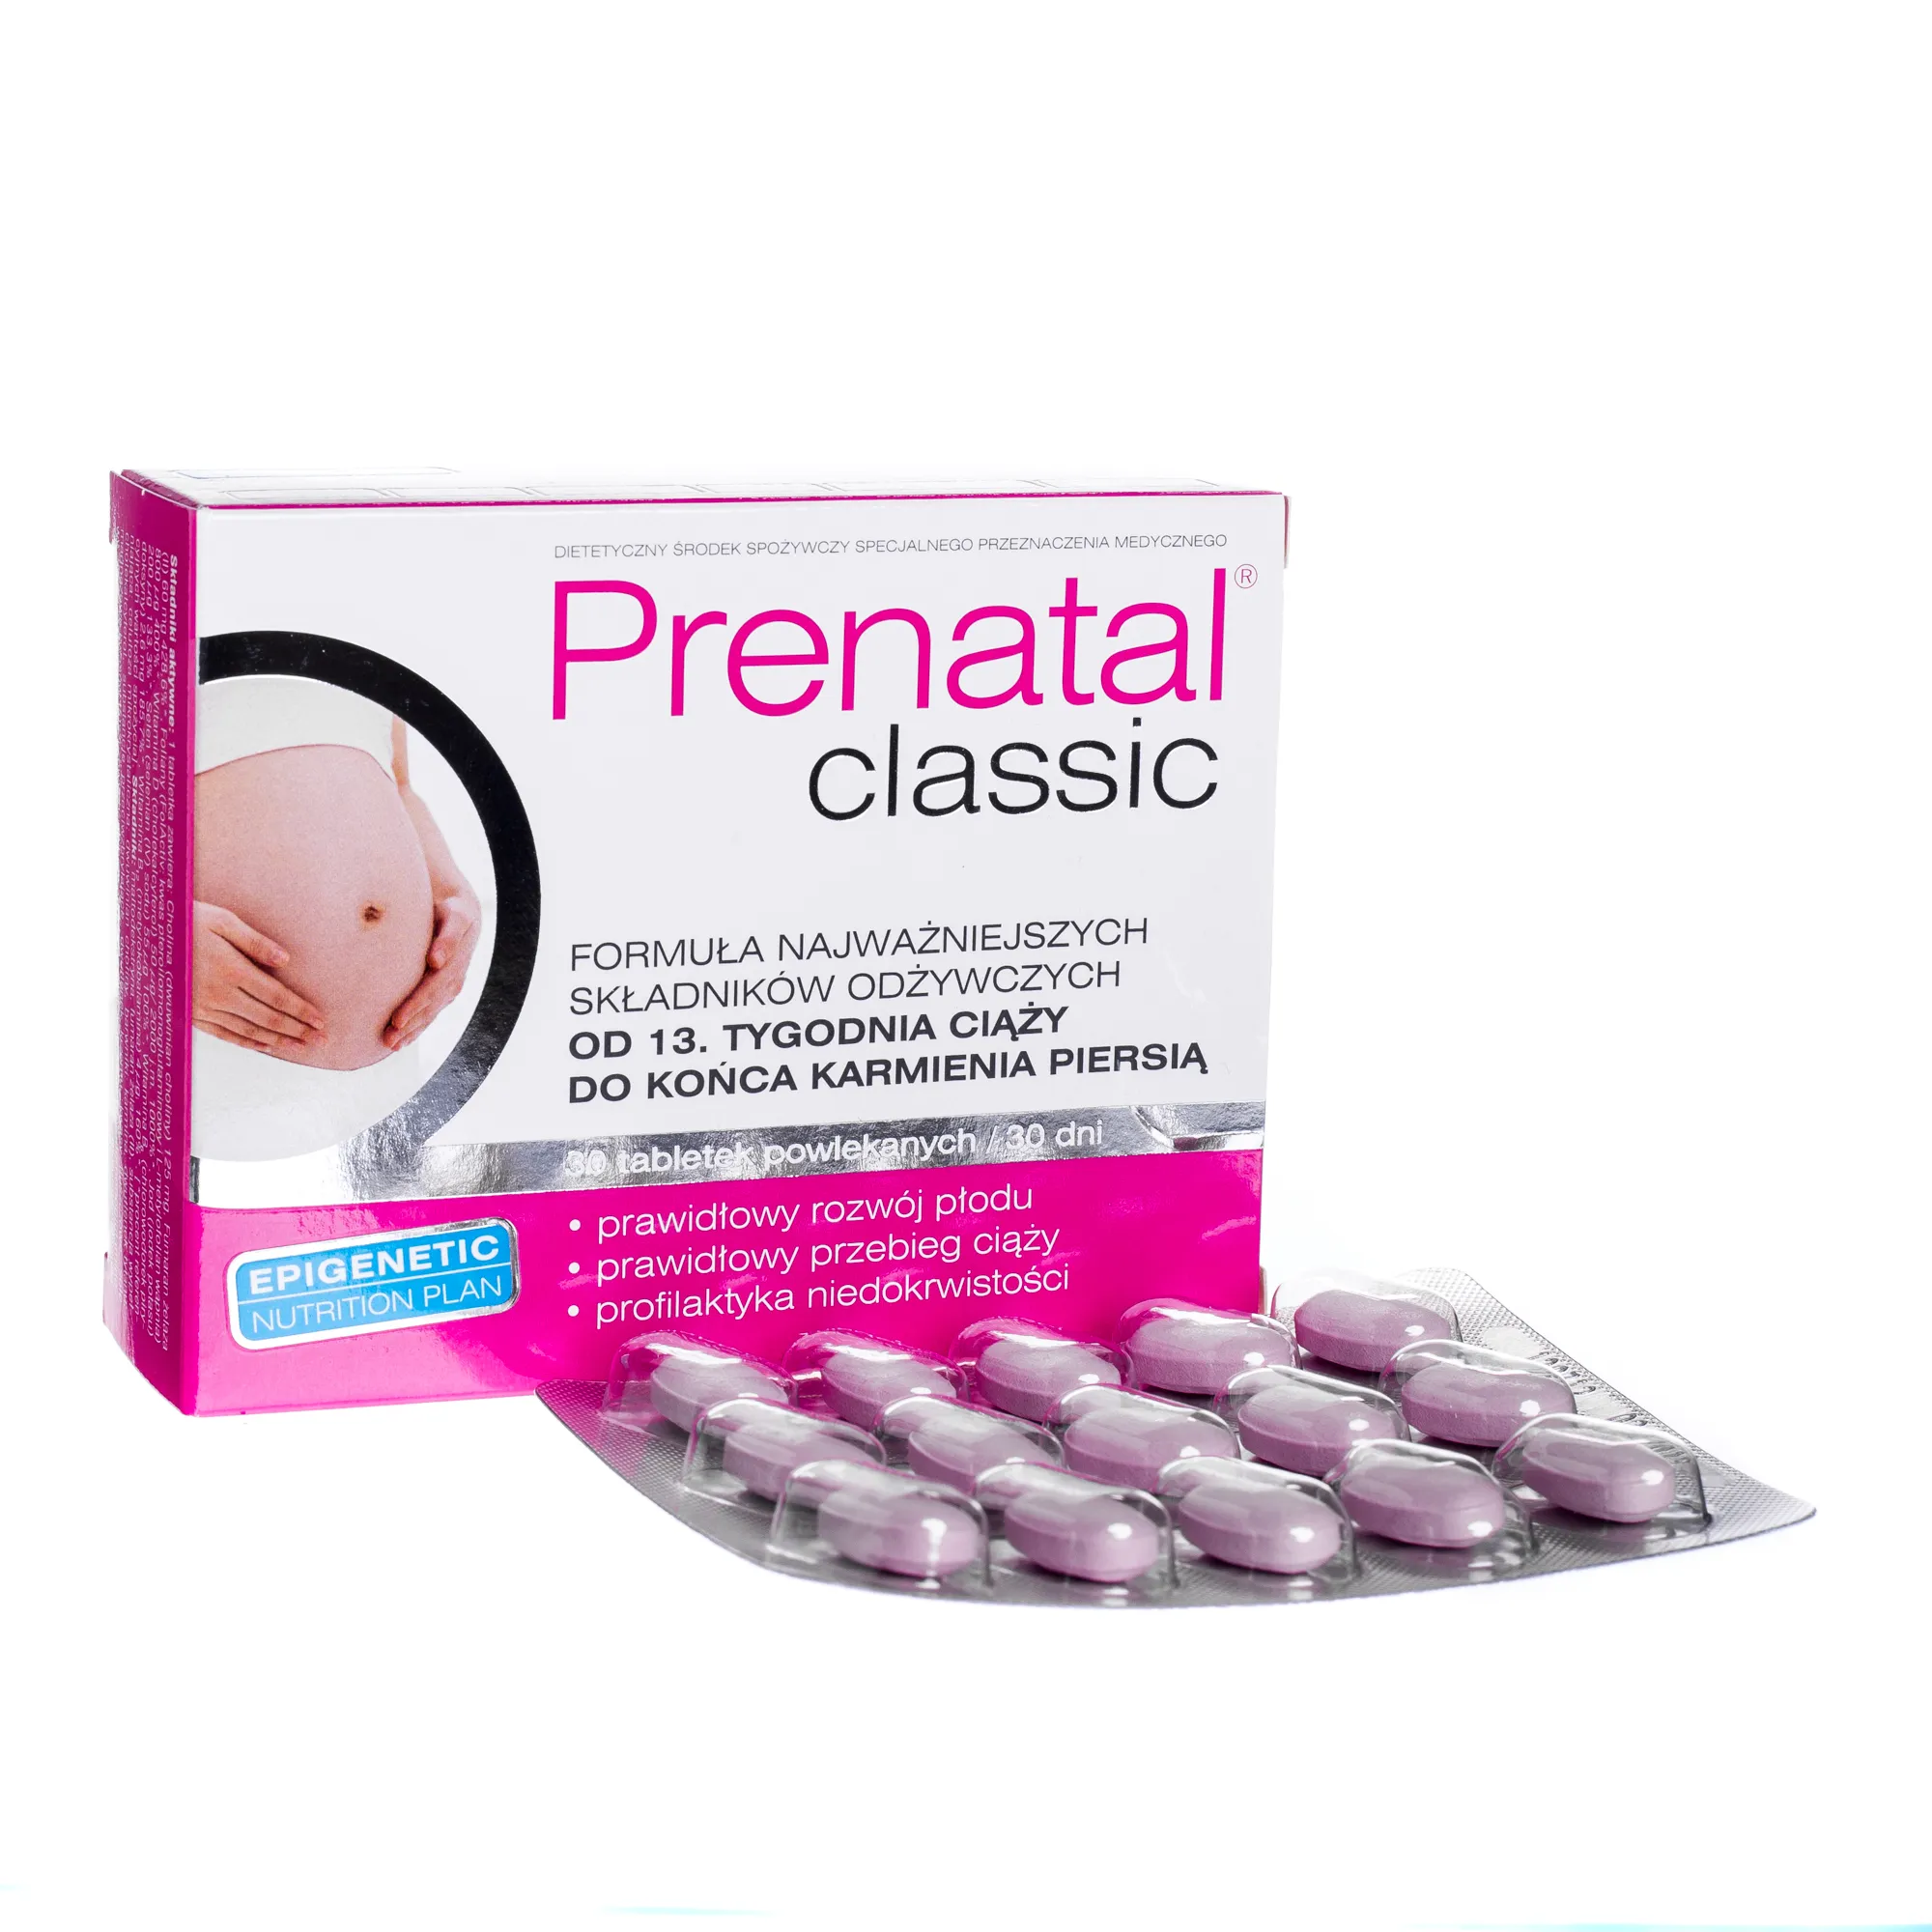 Prenatal classic, 30 tabletek powlekanych